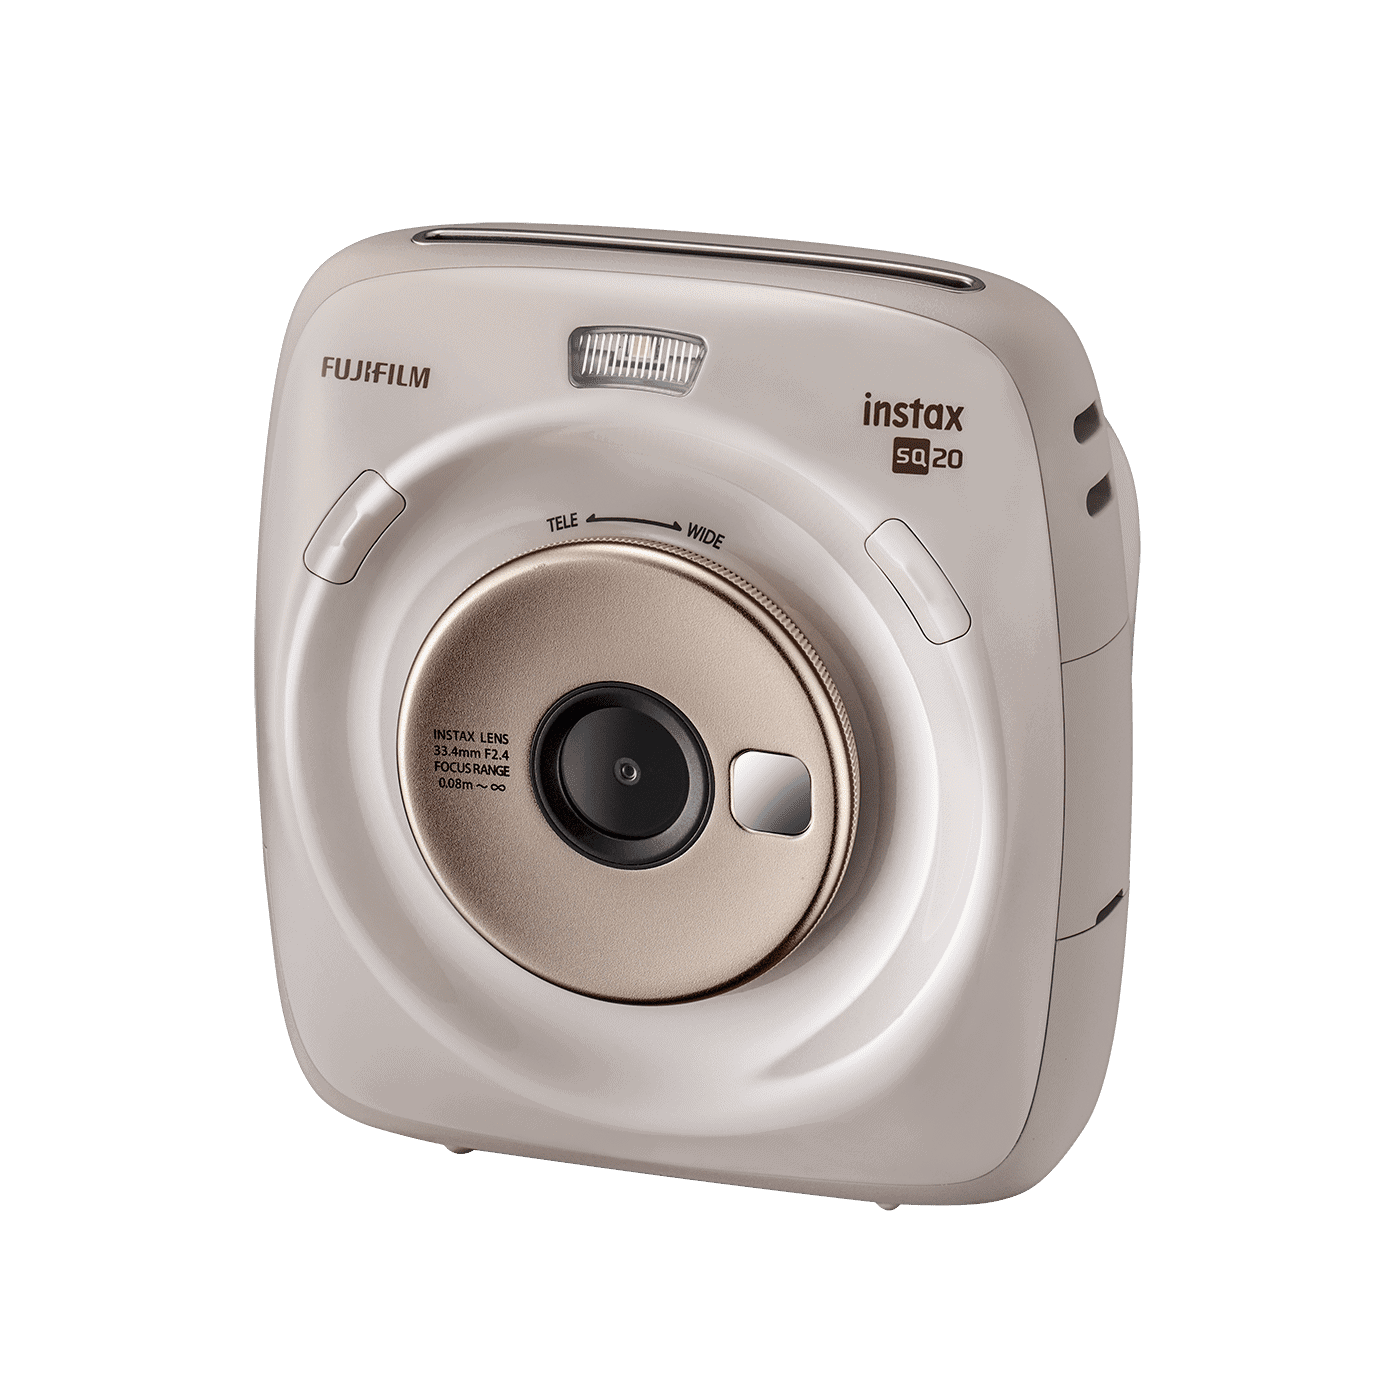 SQ20 Instant Camera | instax Fujifilm Photography